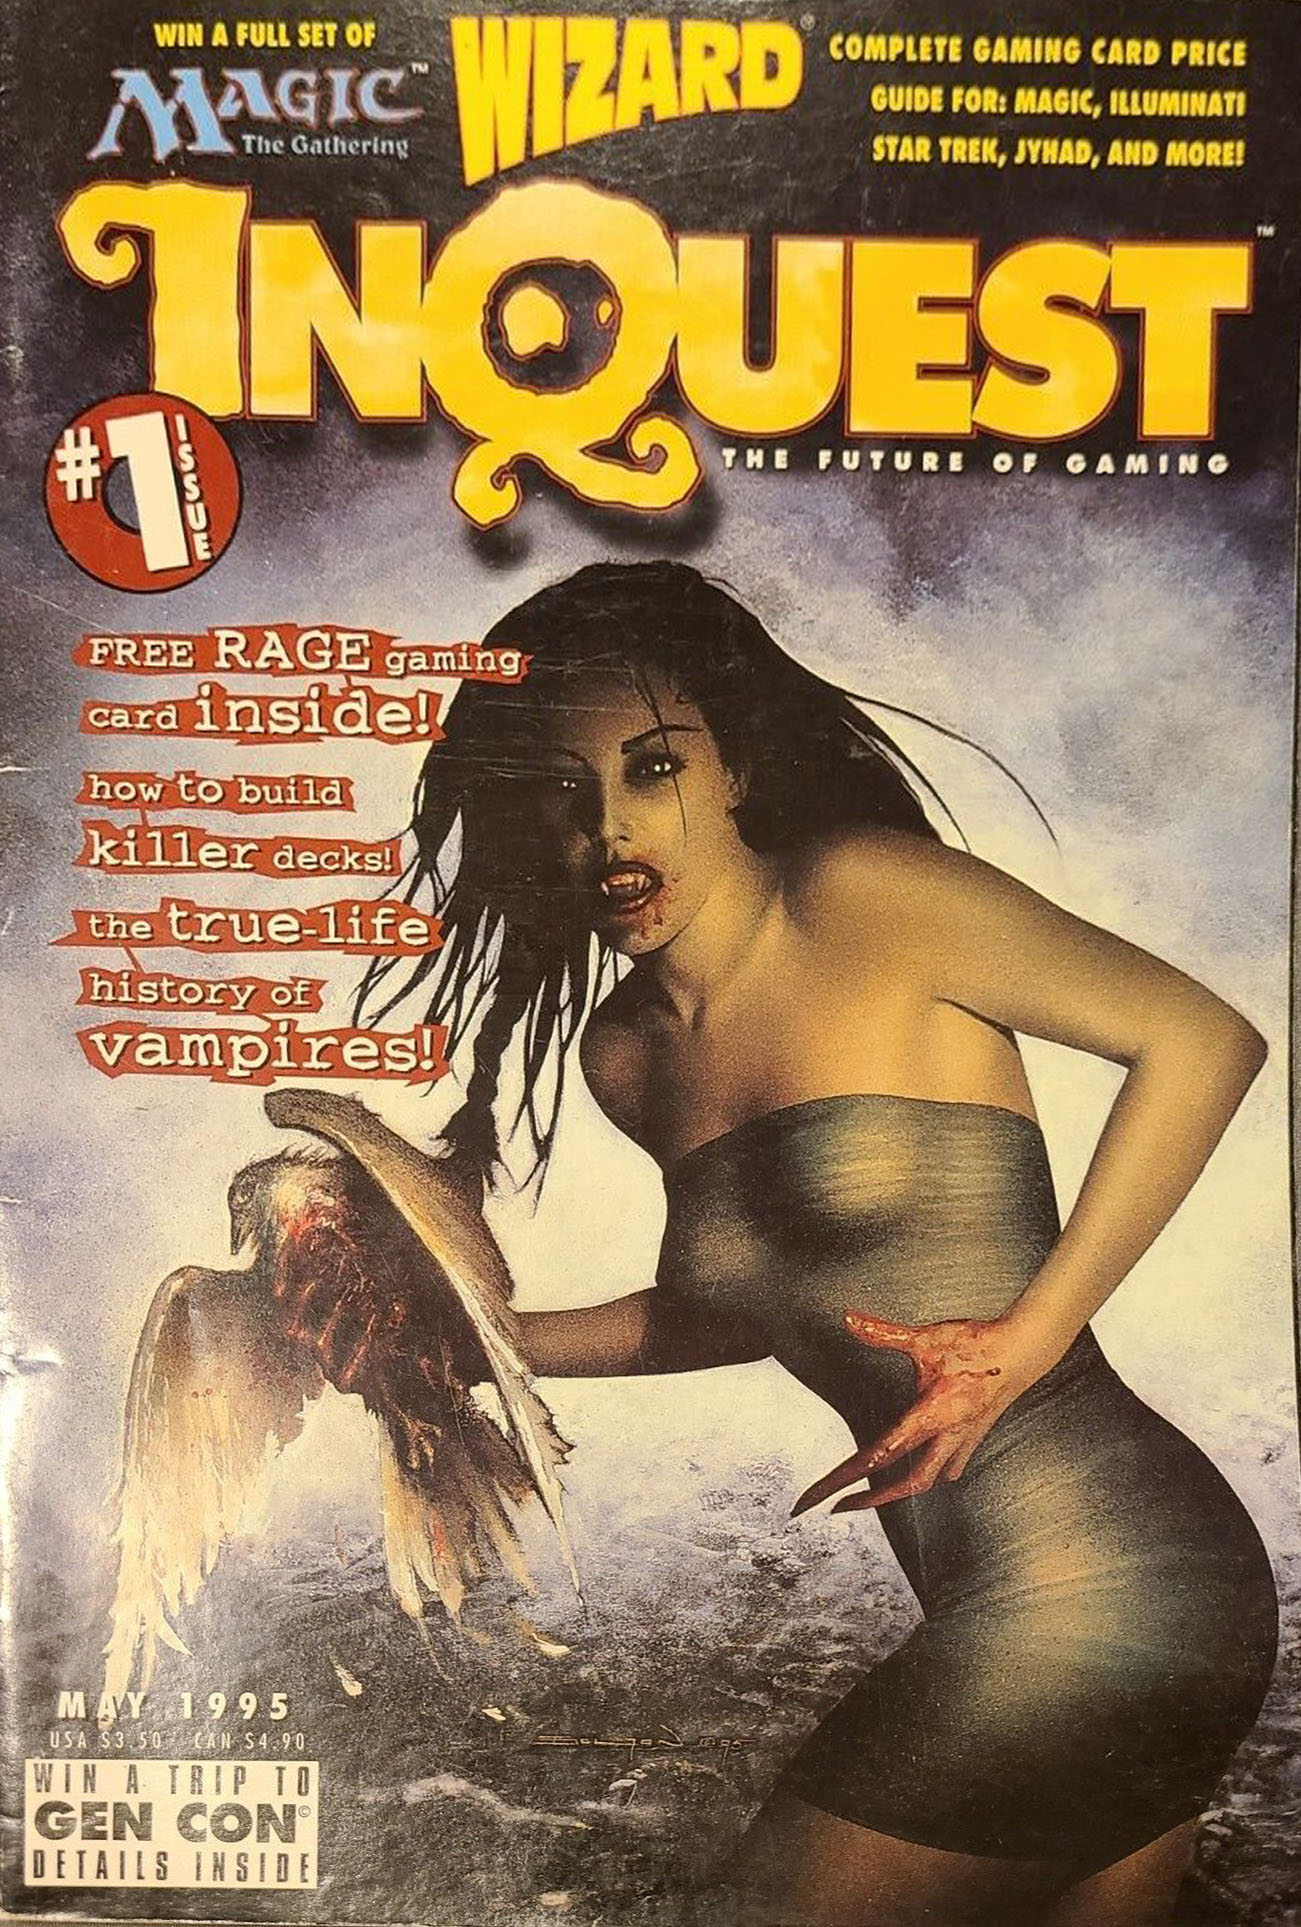 Inquest Gamer # 1, May 1995 magazine back issue Inquest Gamer magizine back copy 